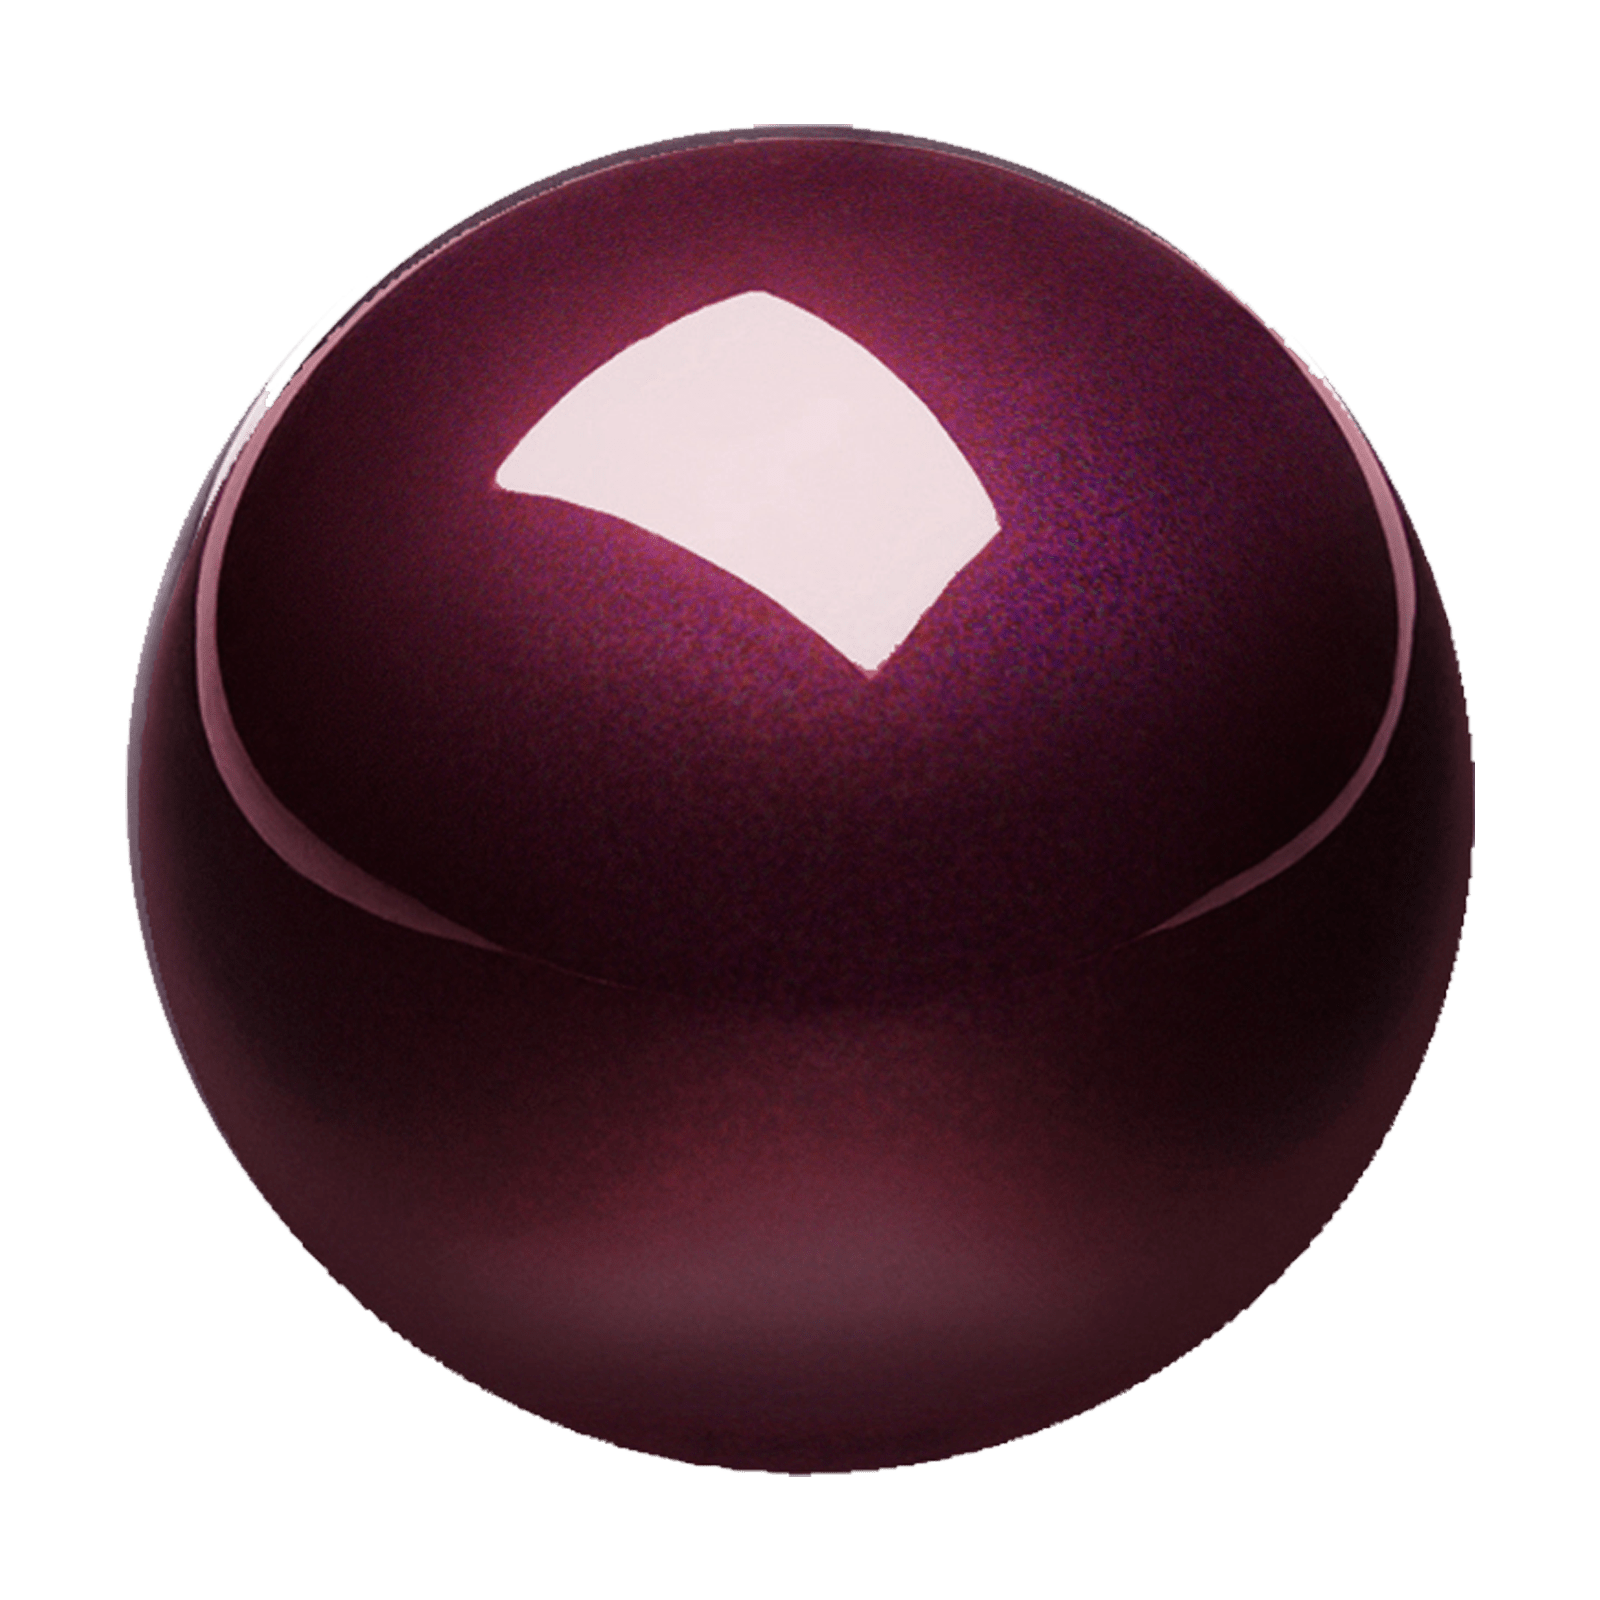 PERIPRO-303 GR - Glossy Red 34mm Trackball - Perixx Europe